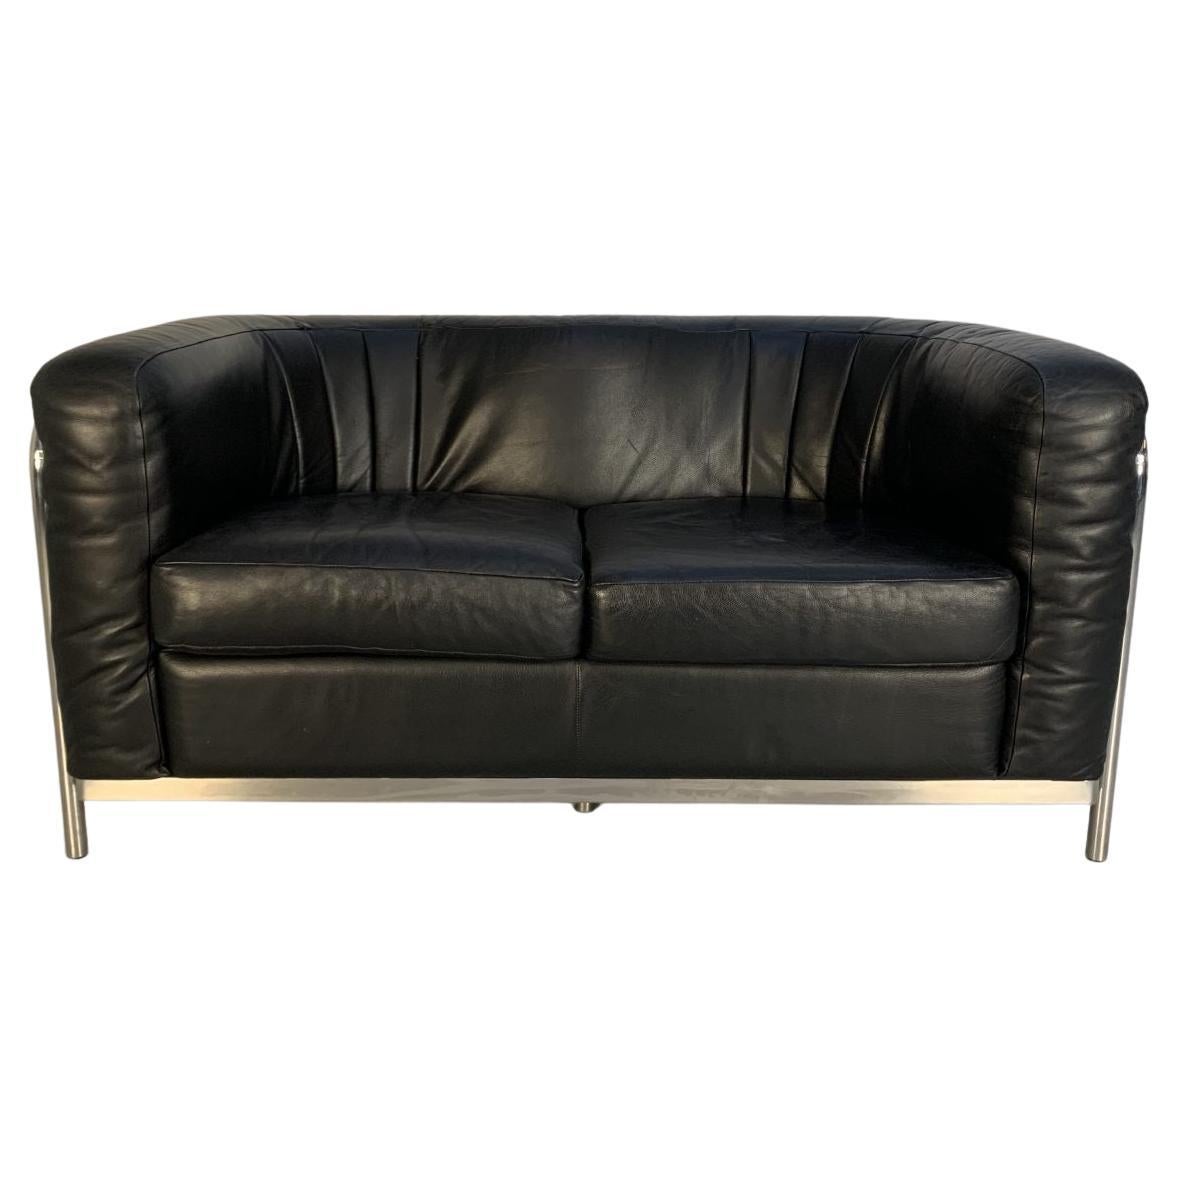 Zanotta “Onda” Sofa – 2-Seat – in Black “Scozia” Leather and Chrome